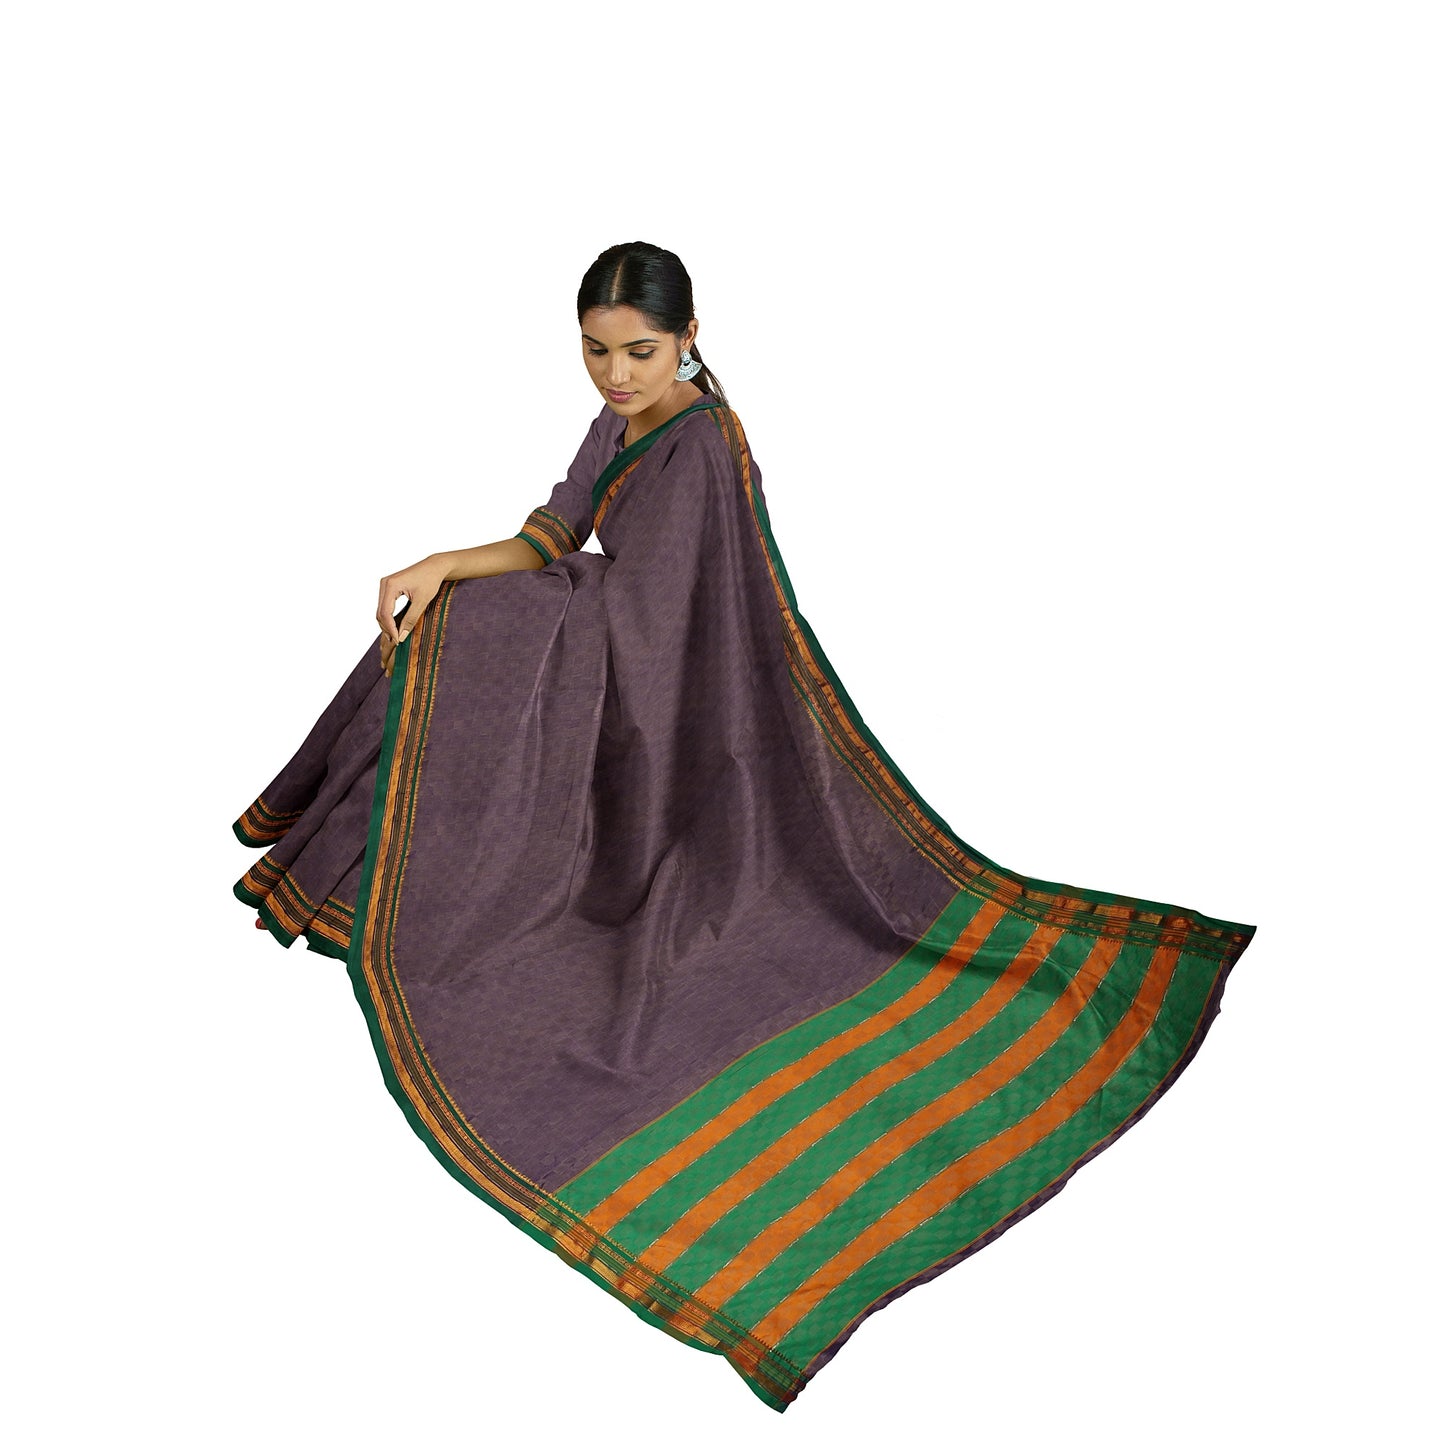 Ambuja Soft Mercerized Cotton saree - Lavender with Green border